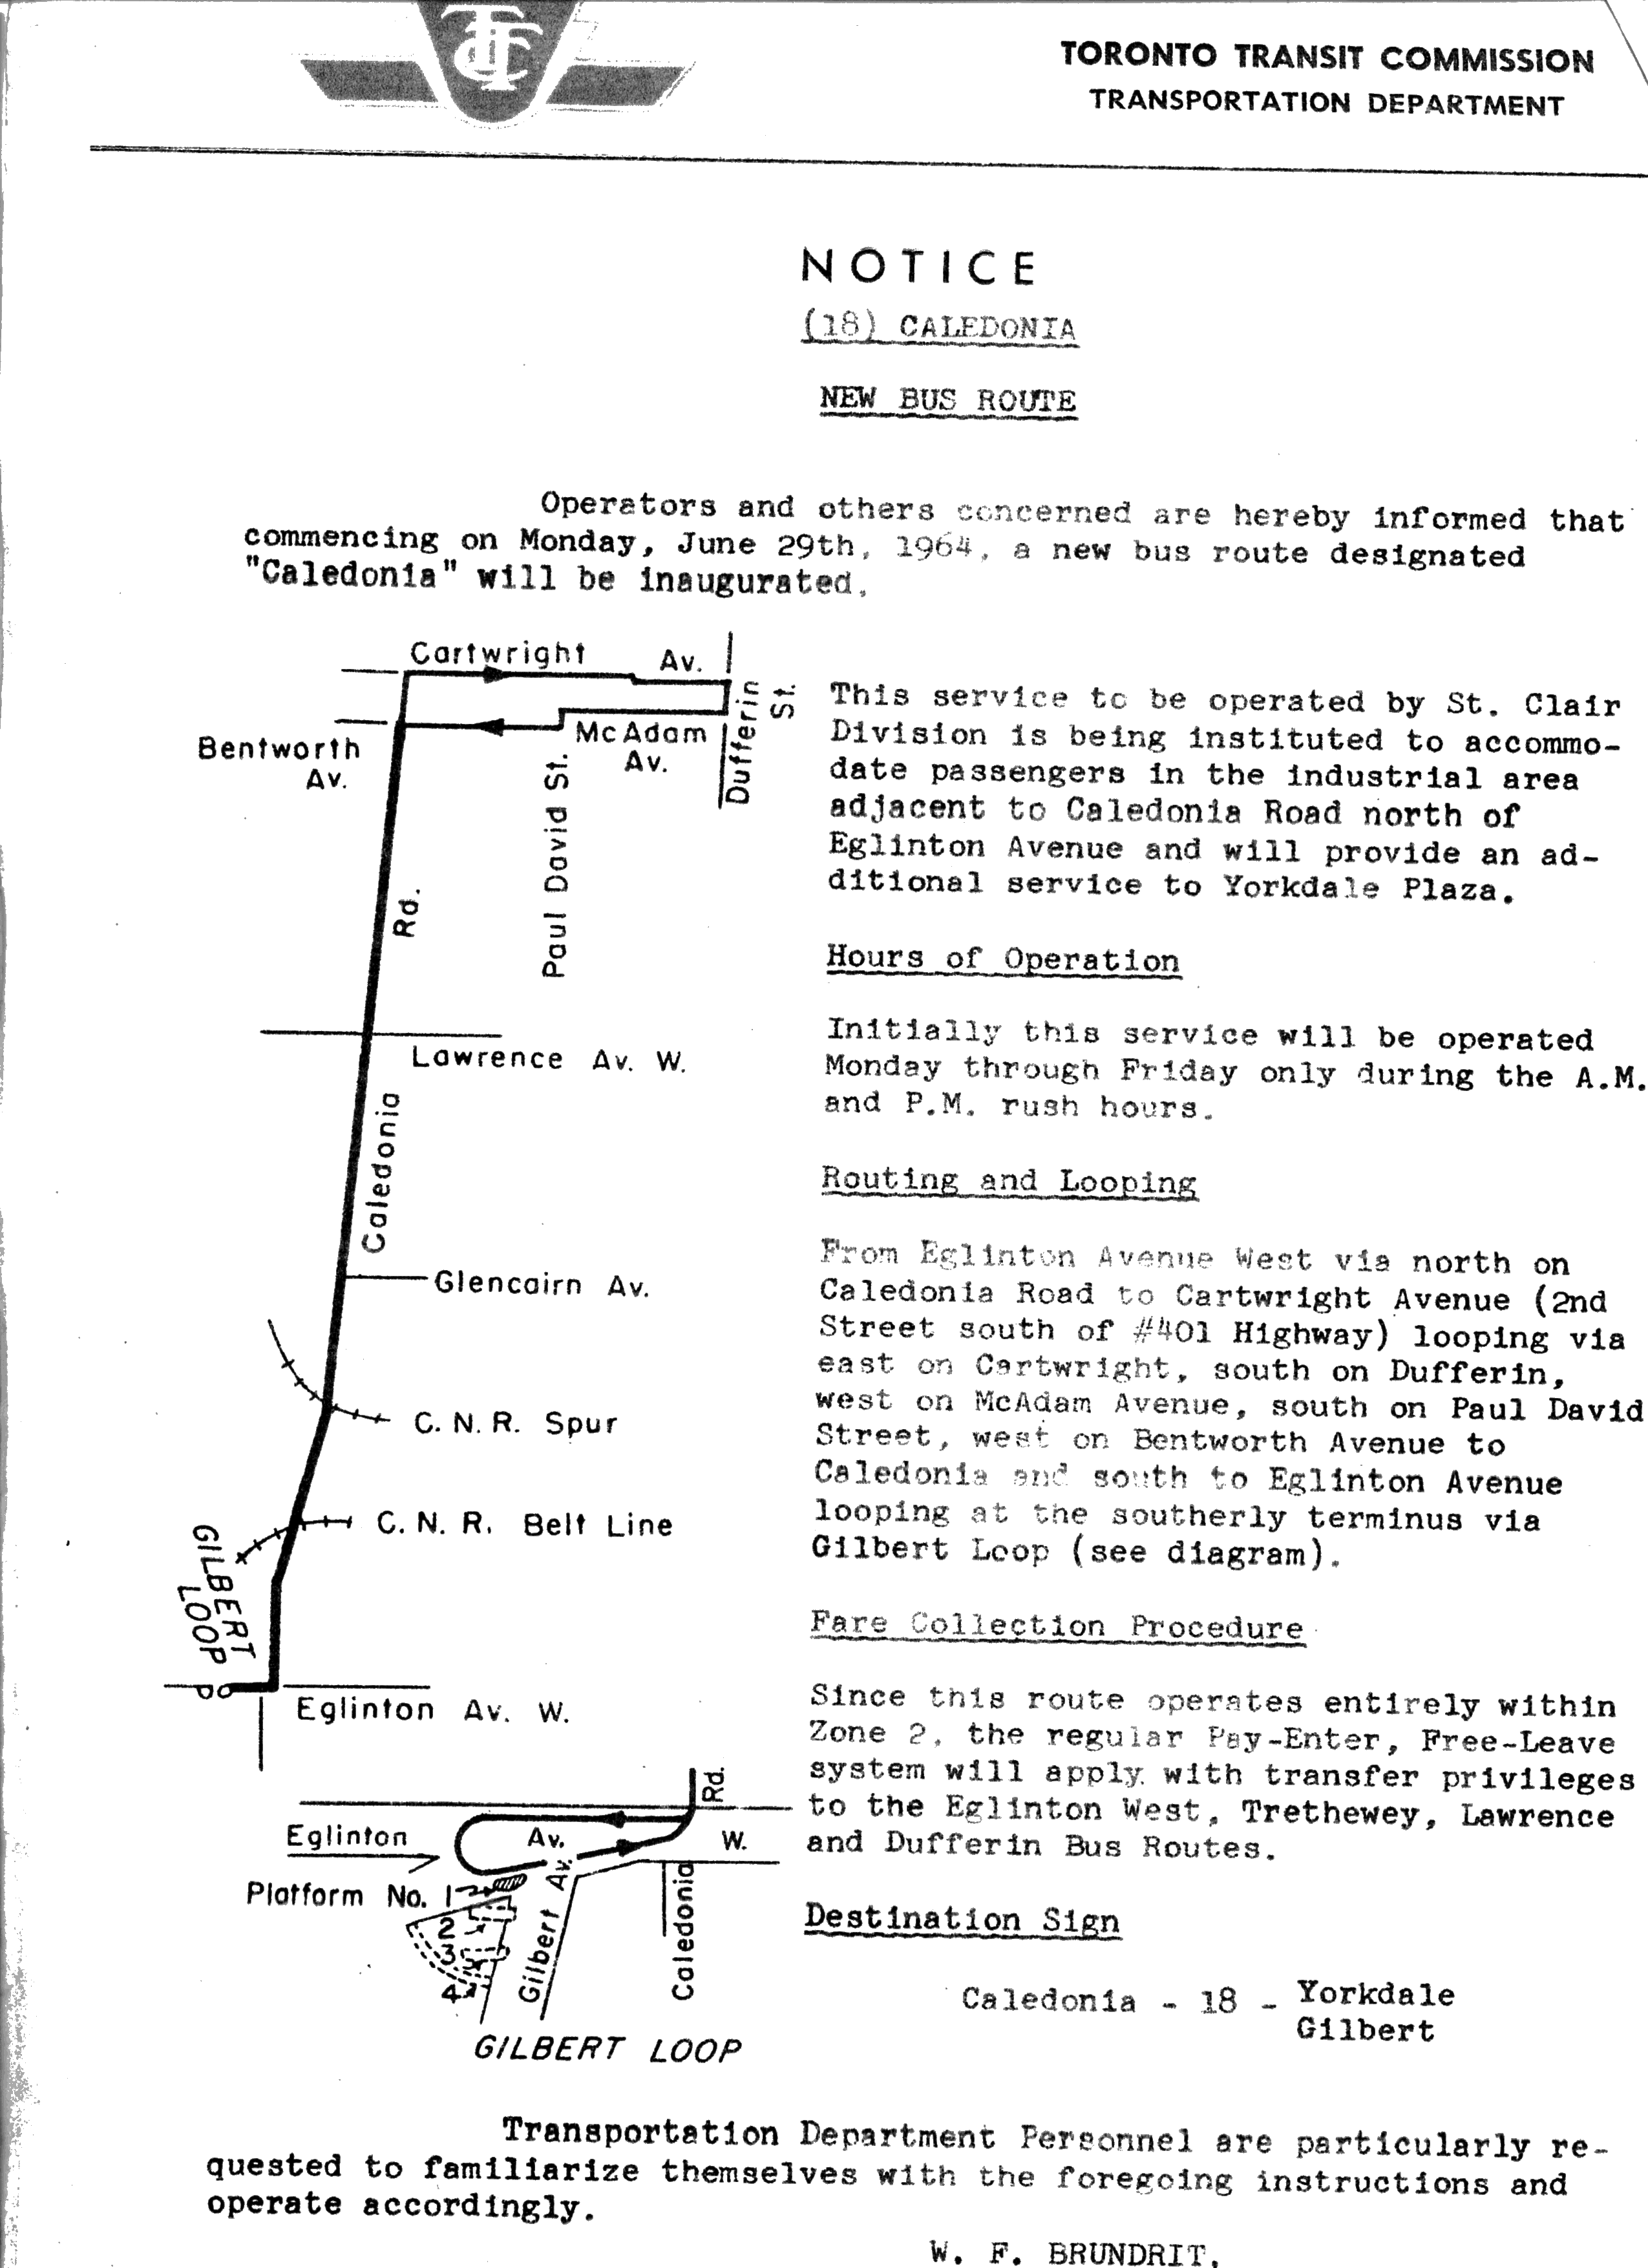 TTC 0000 18 Caledonia 1964 Orders and Notice